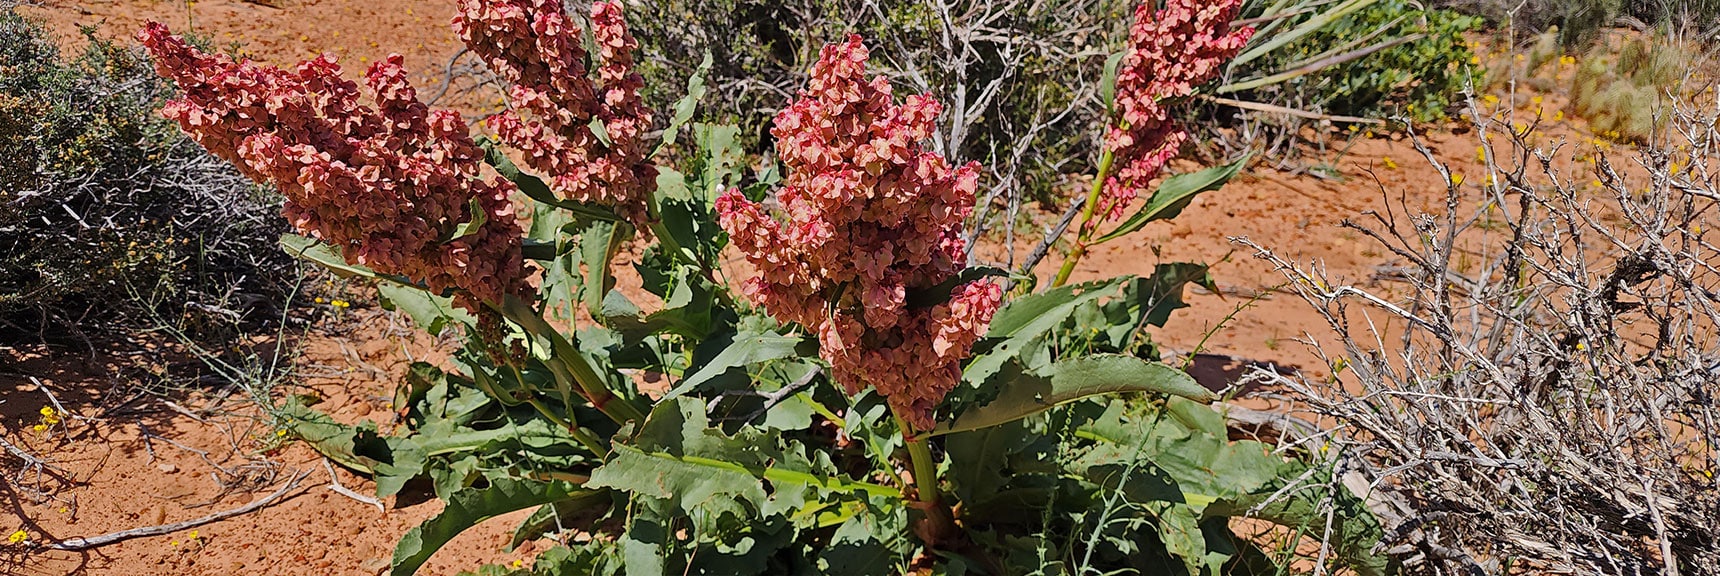 Wild Rhubarb | Juniper Canyon | Red Rock Canyon NCA, Nevada